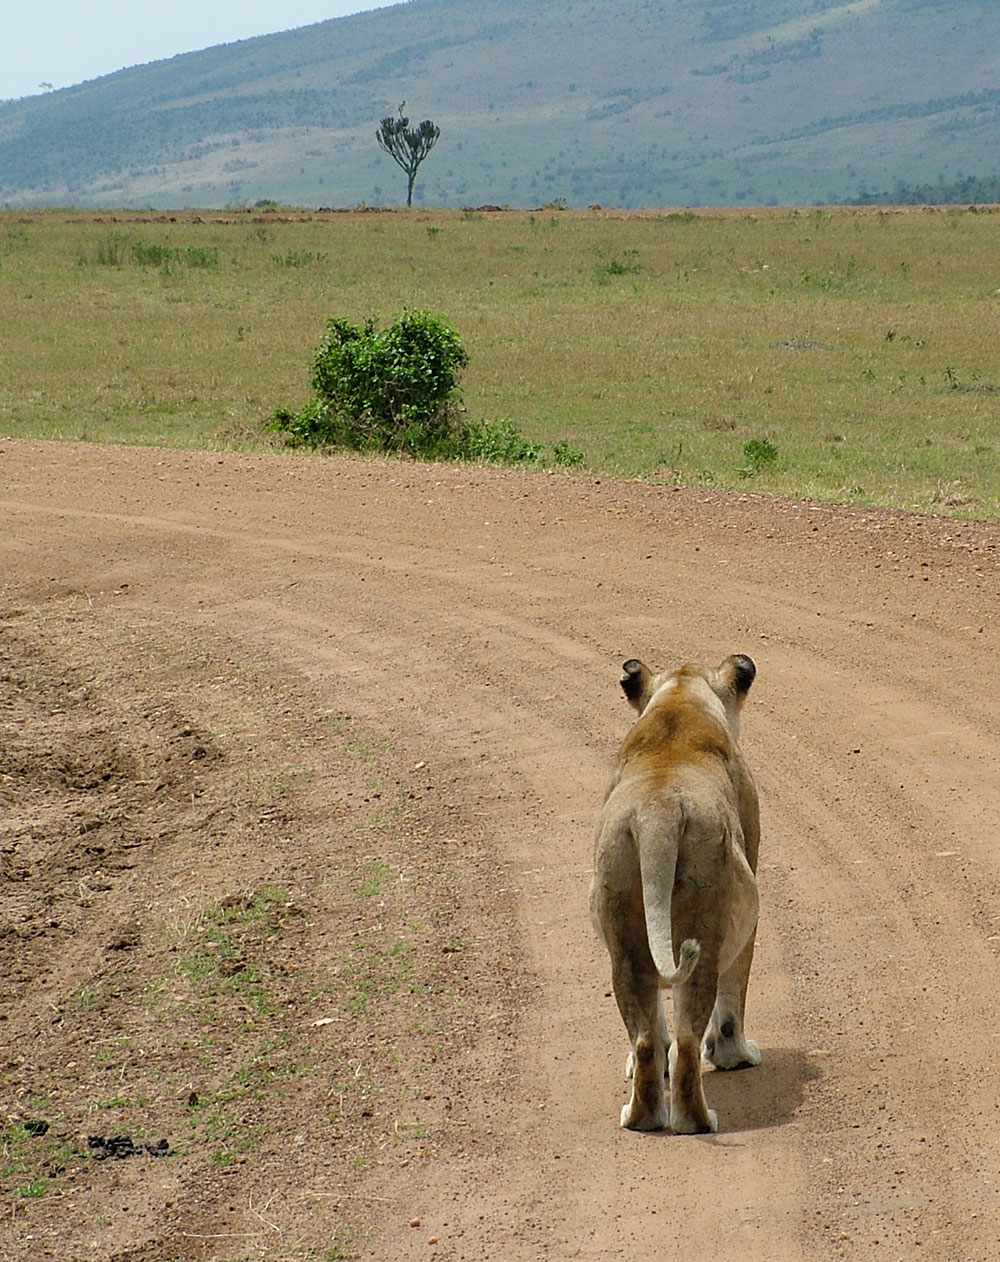 Lion walking through a Kenyan landscape